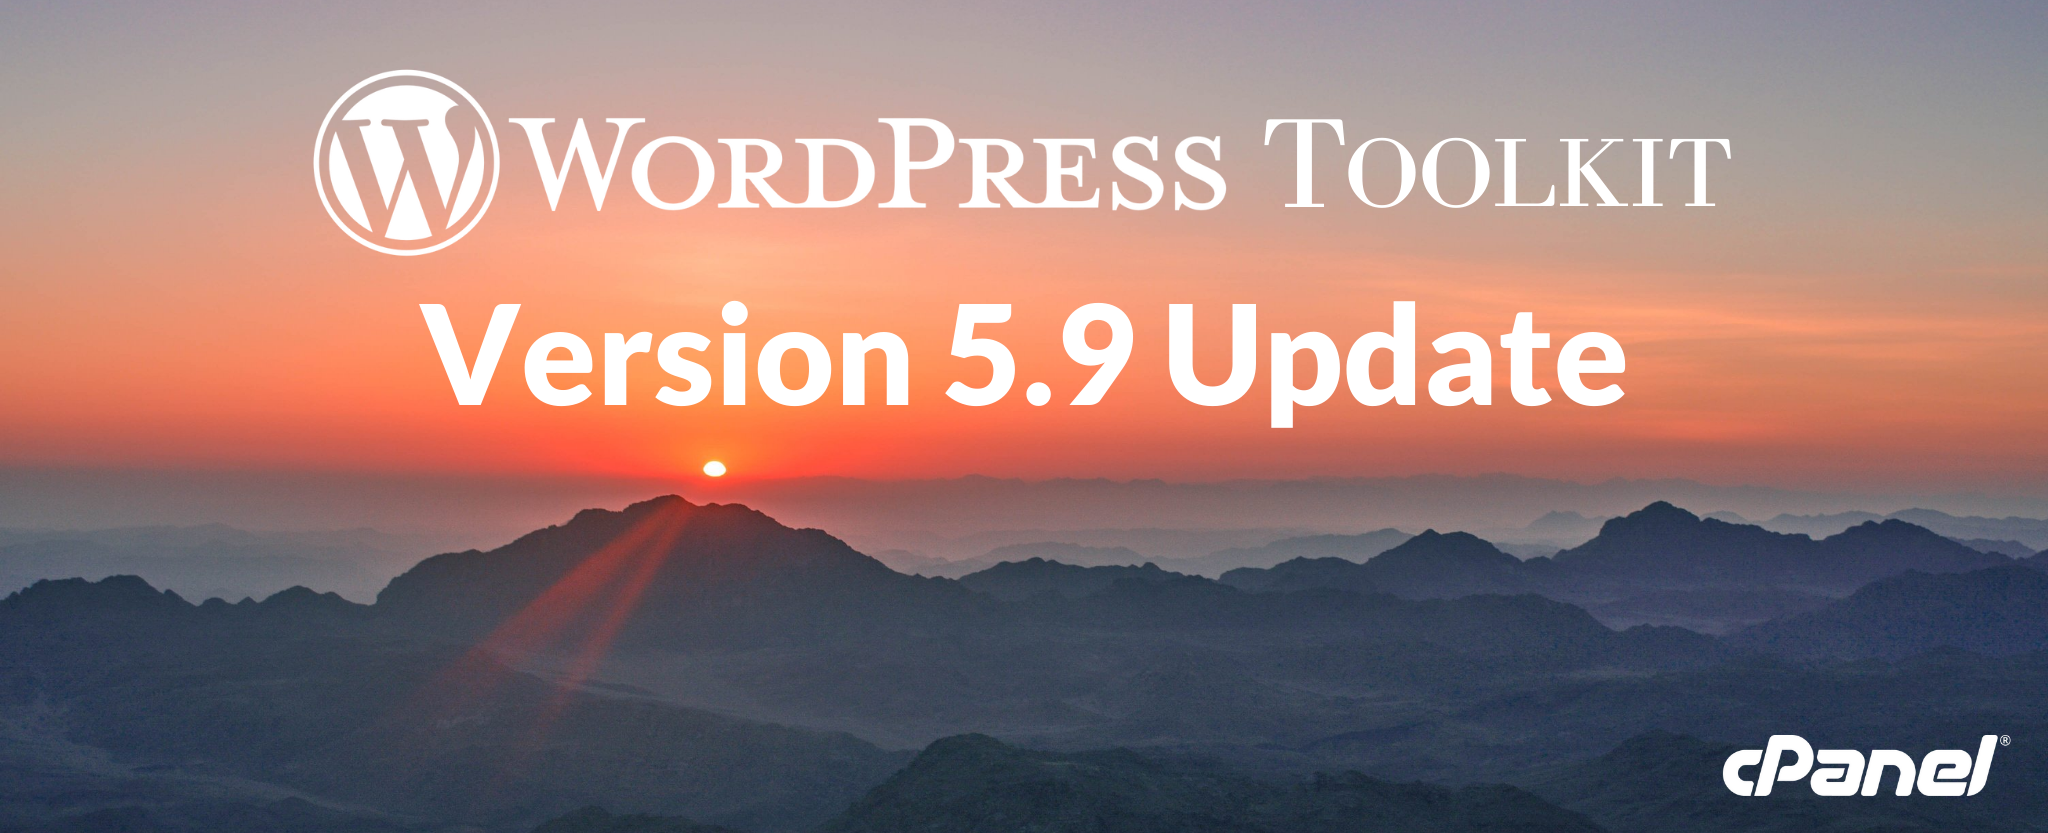 WP Toolkit Version 5.9 Update